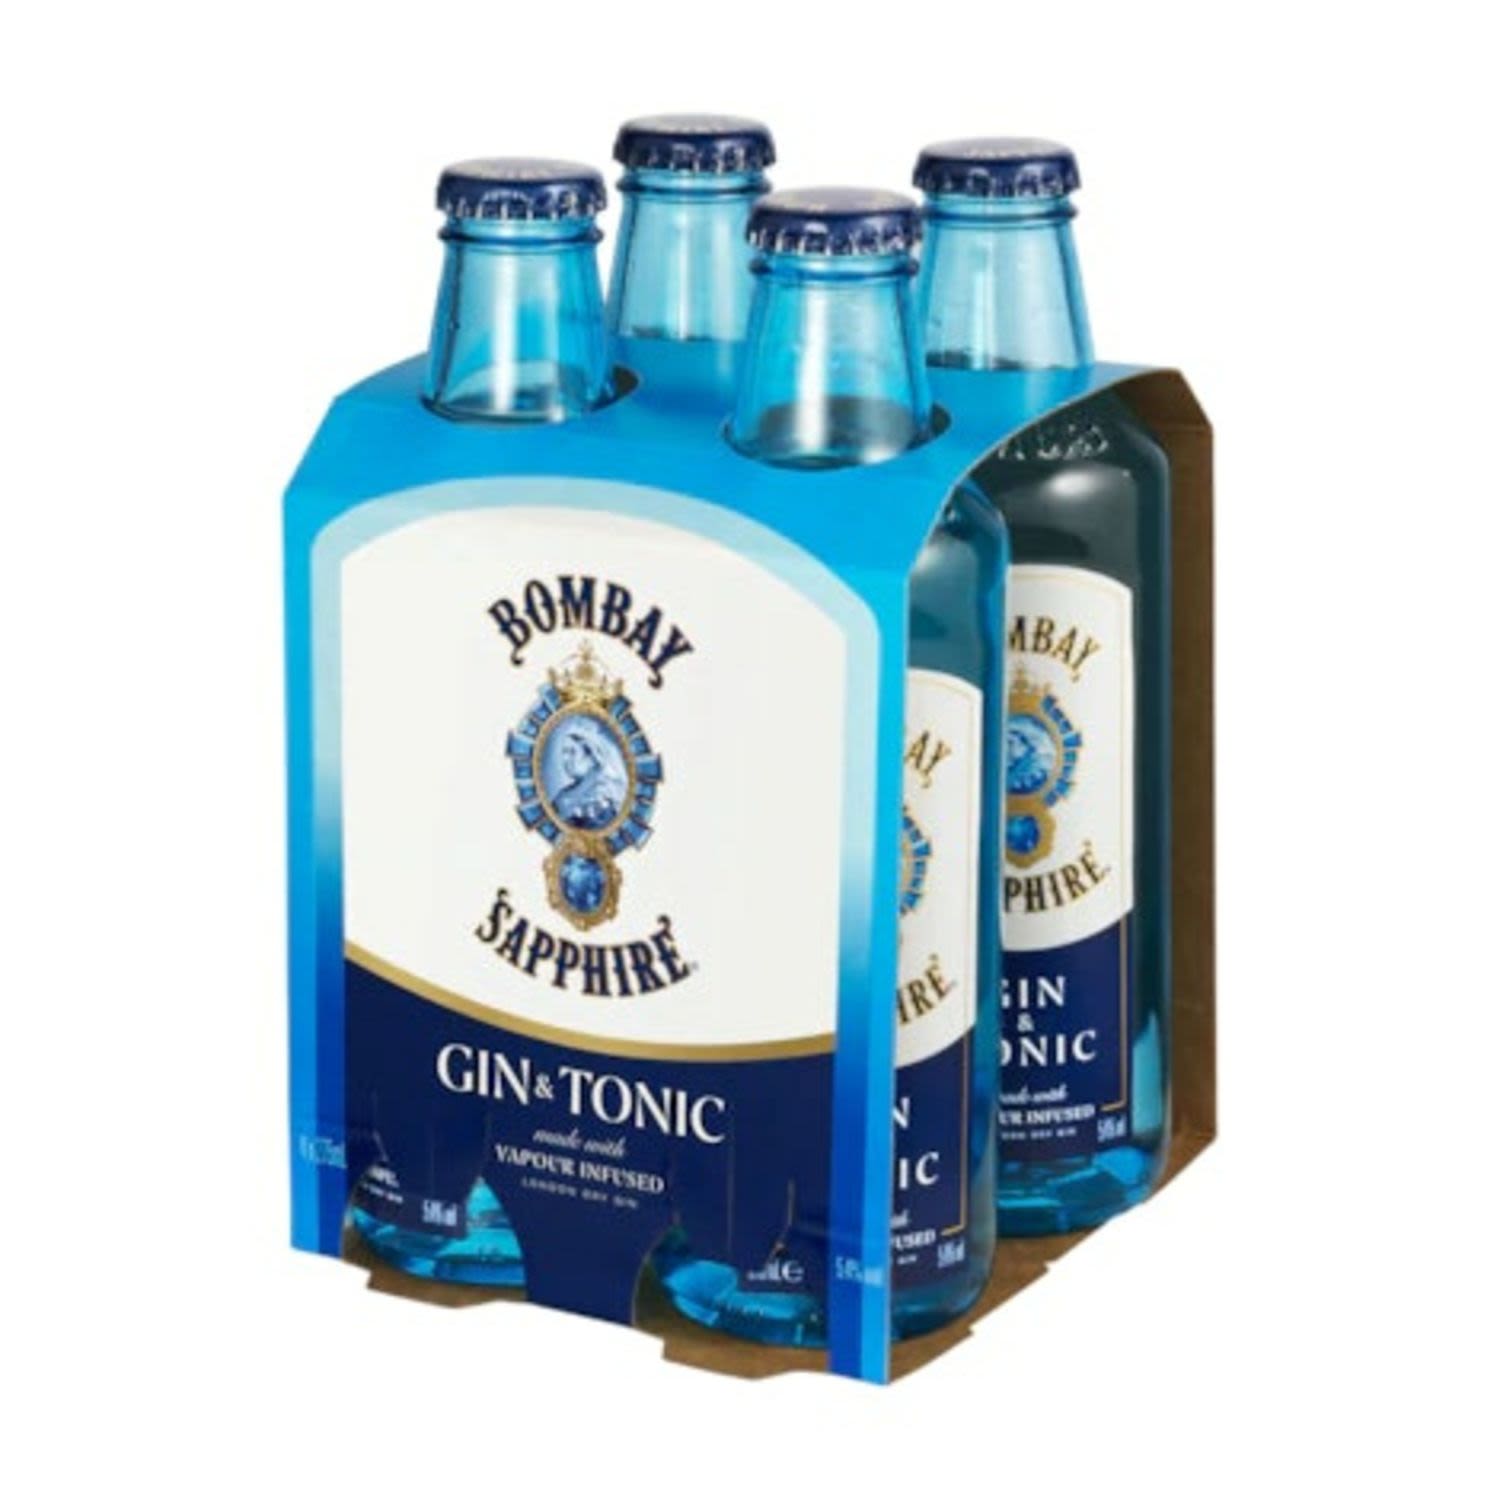 Bombay Sapphire Gin & Tonic Bottle 275mL 4 Pack